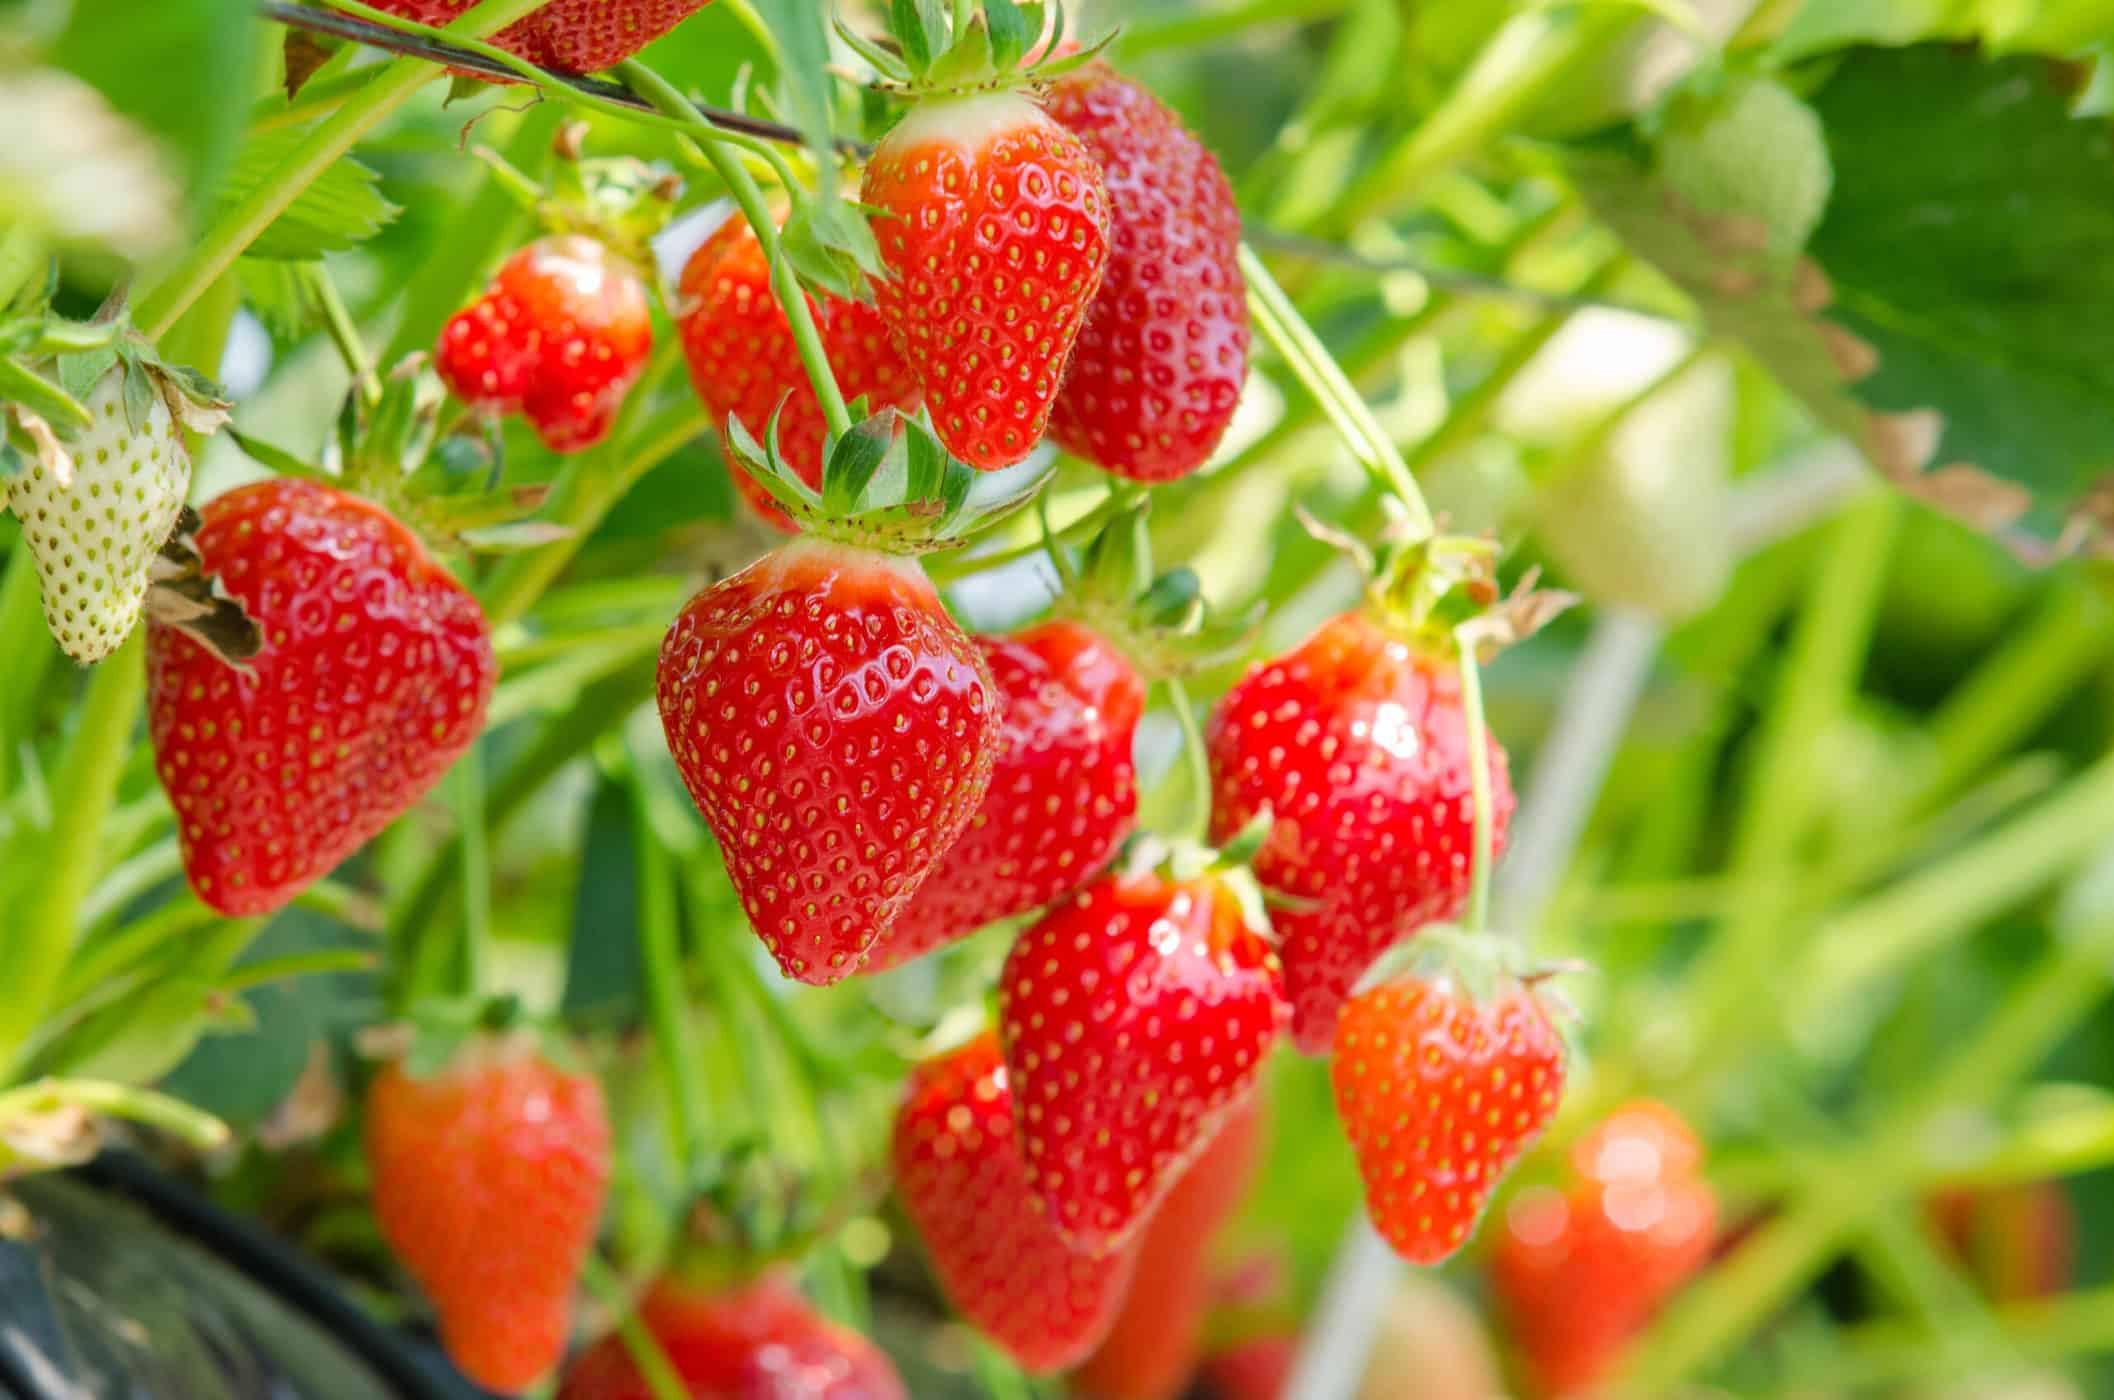 Quinault strawberries